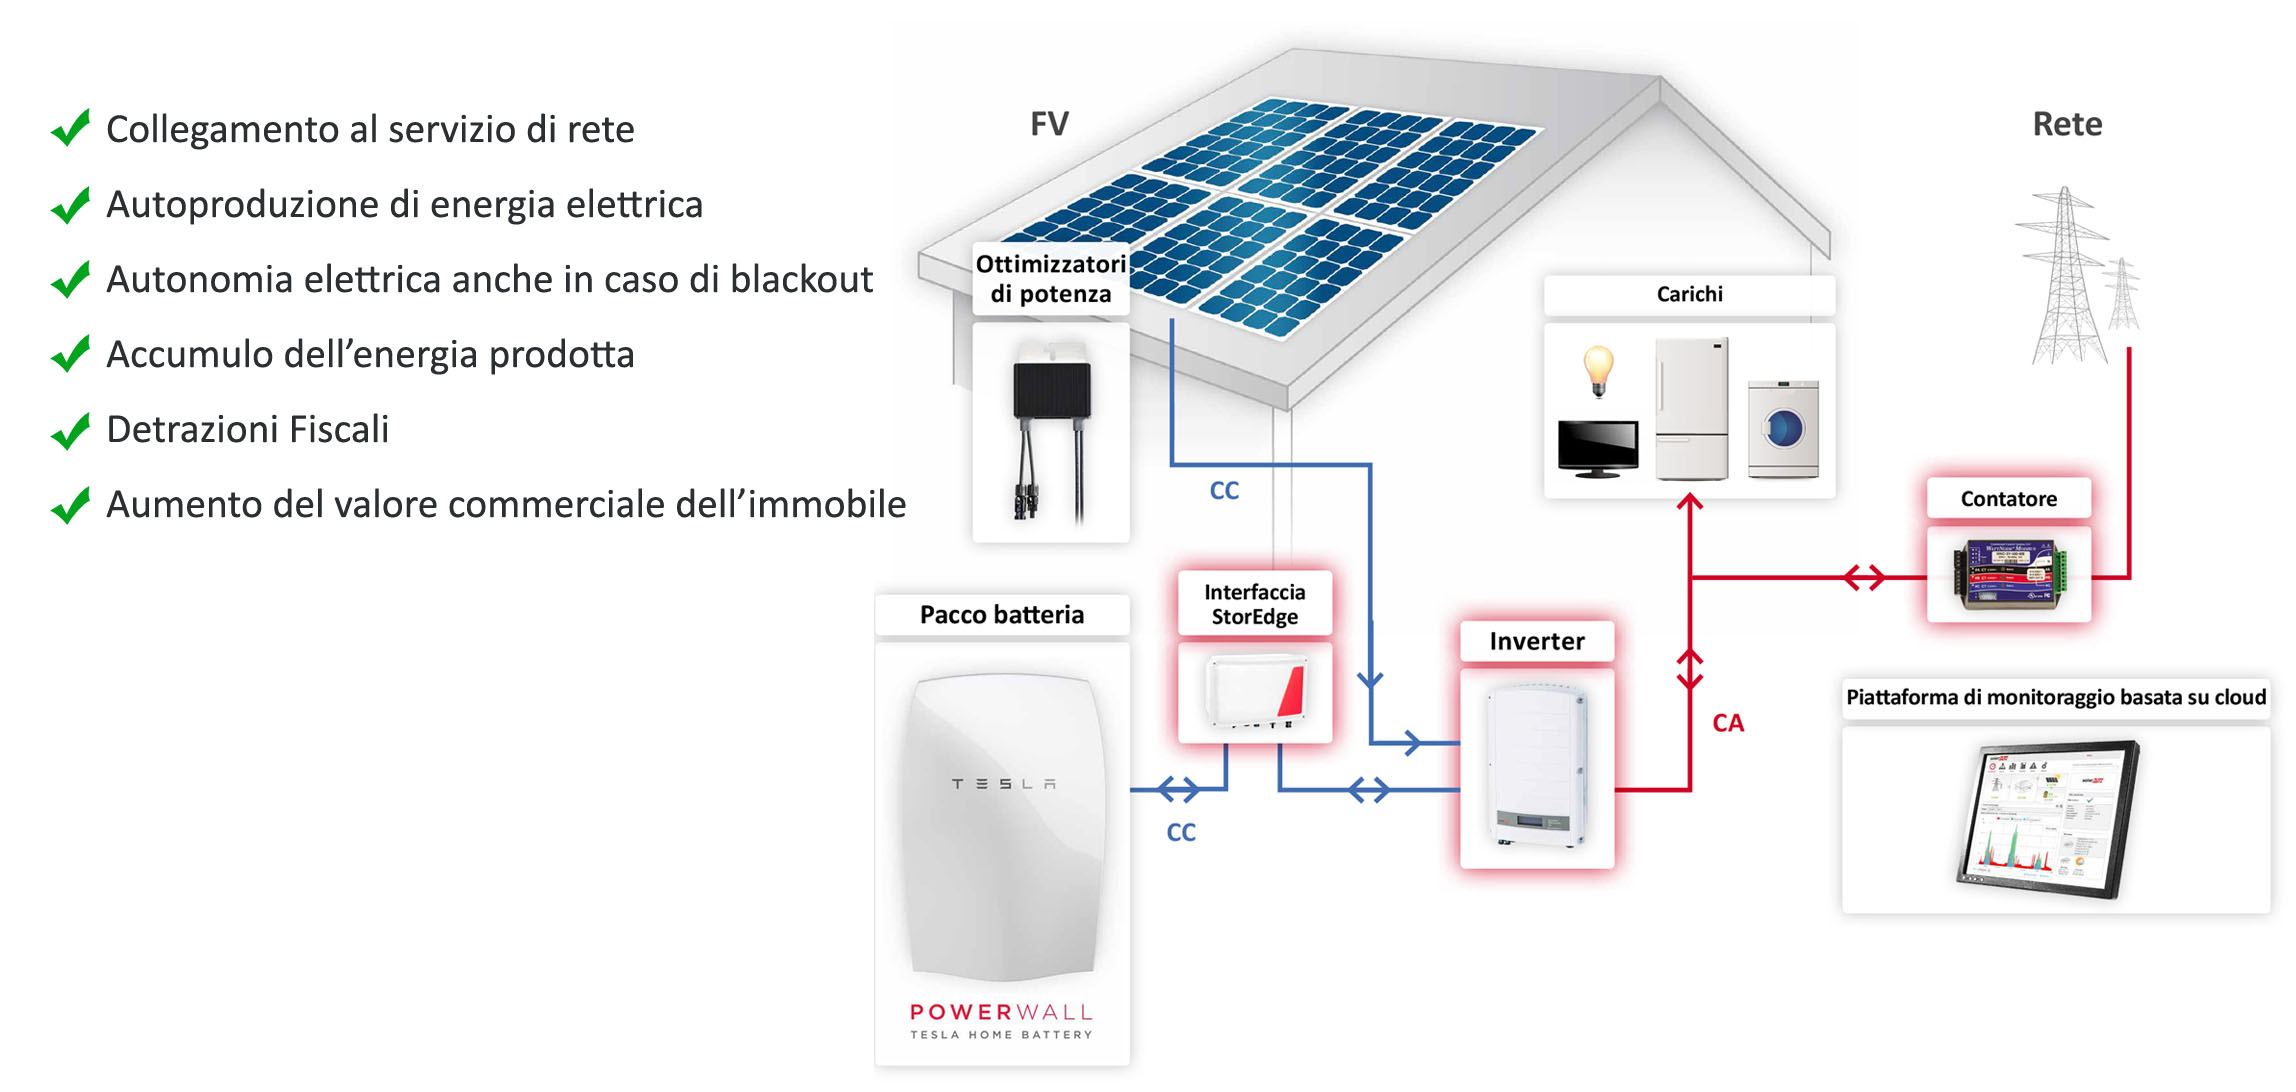 Accumulatore di corrente per impianti solari - Accumulatore corrente